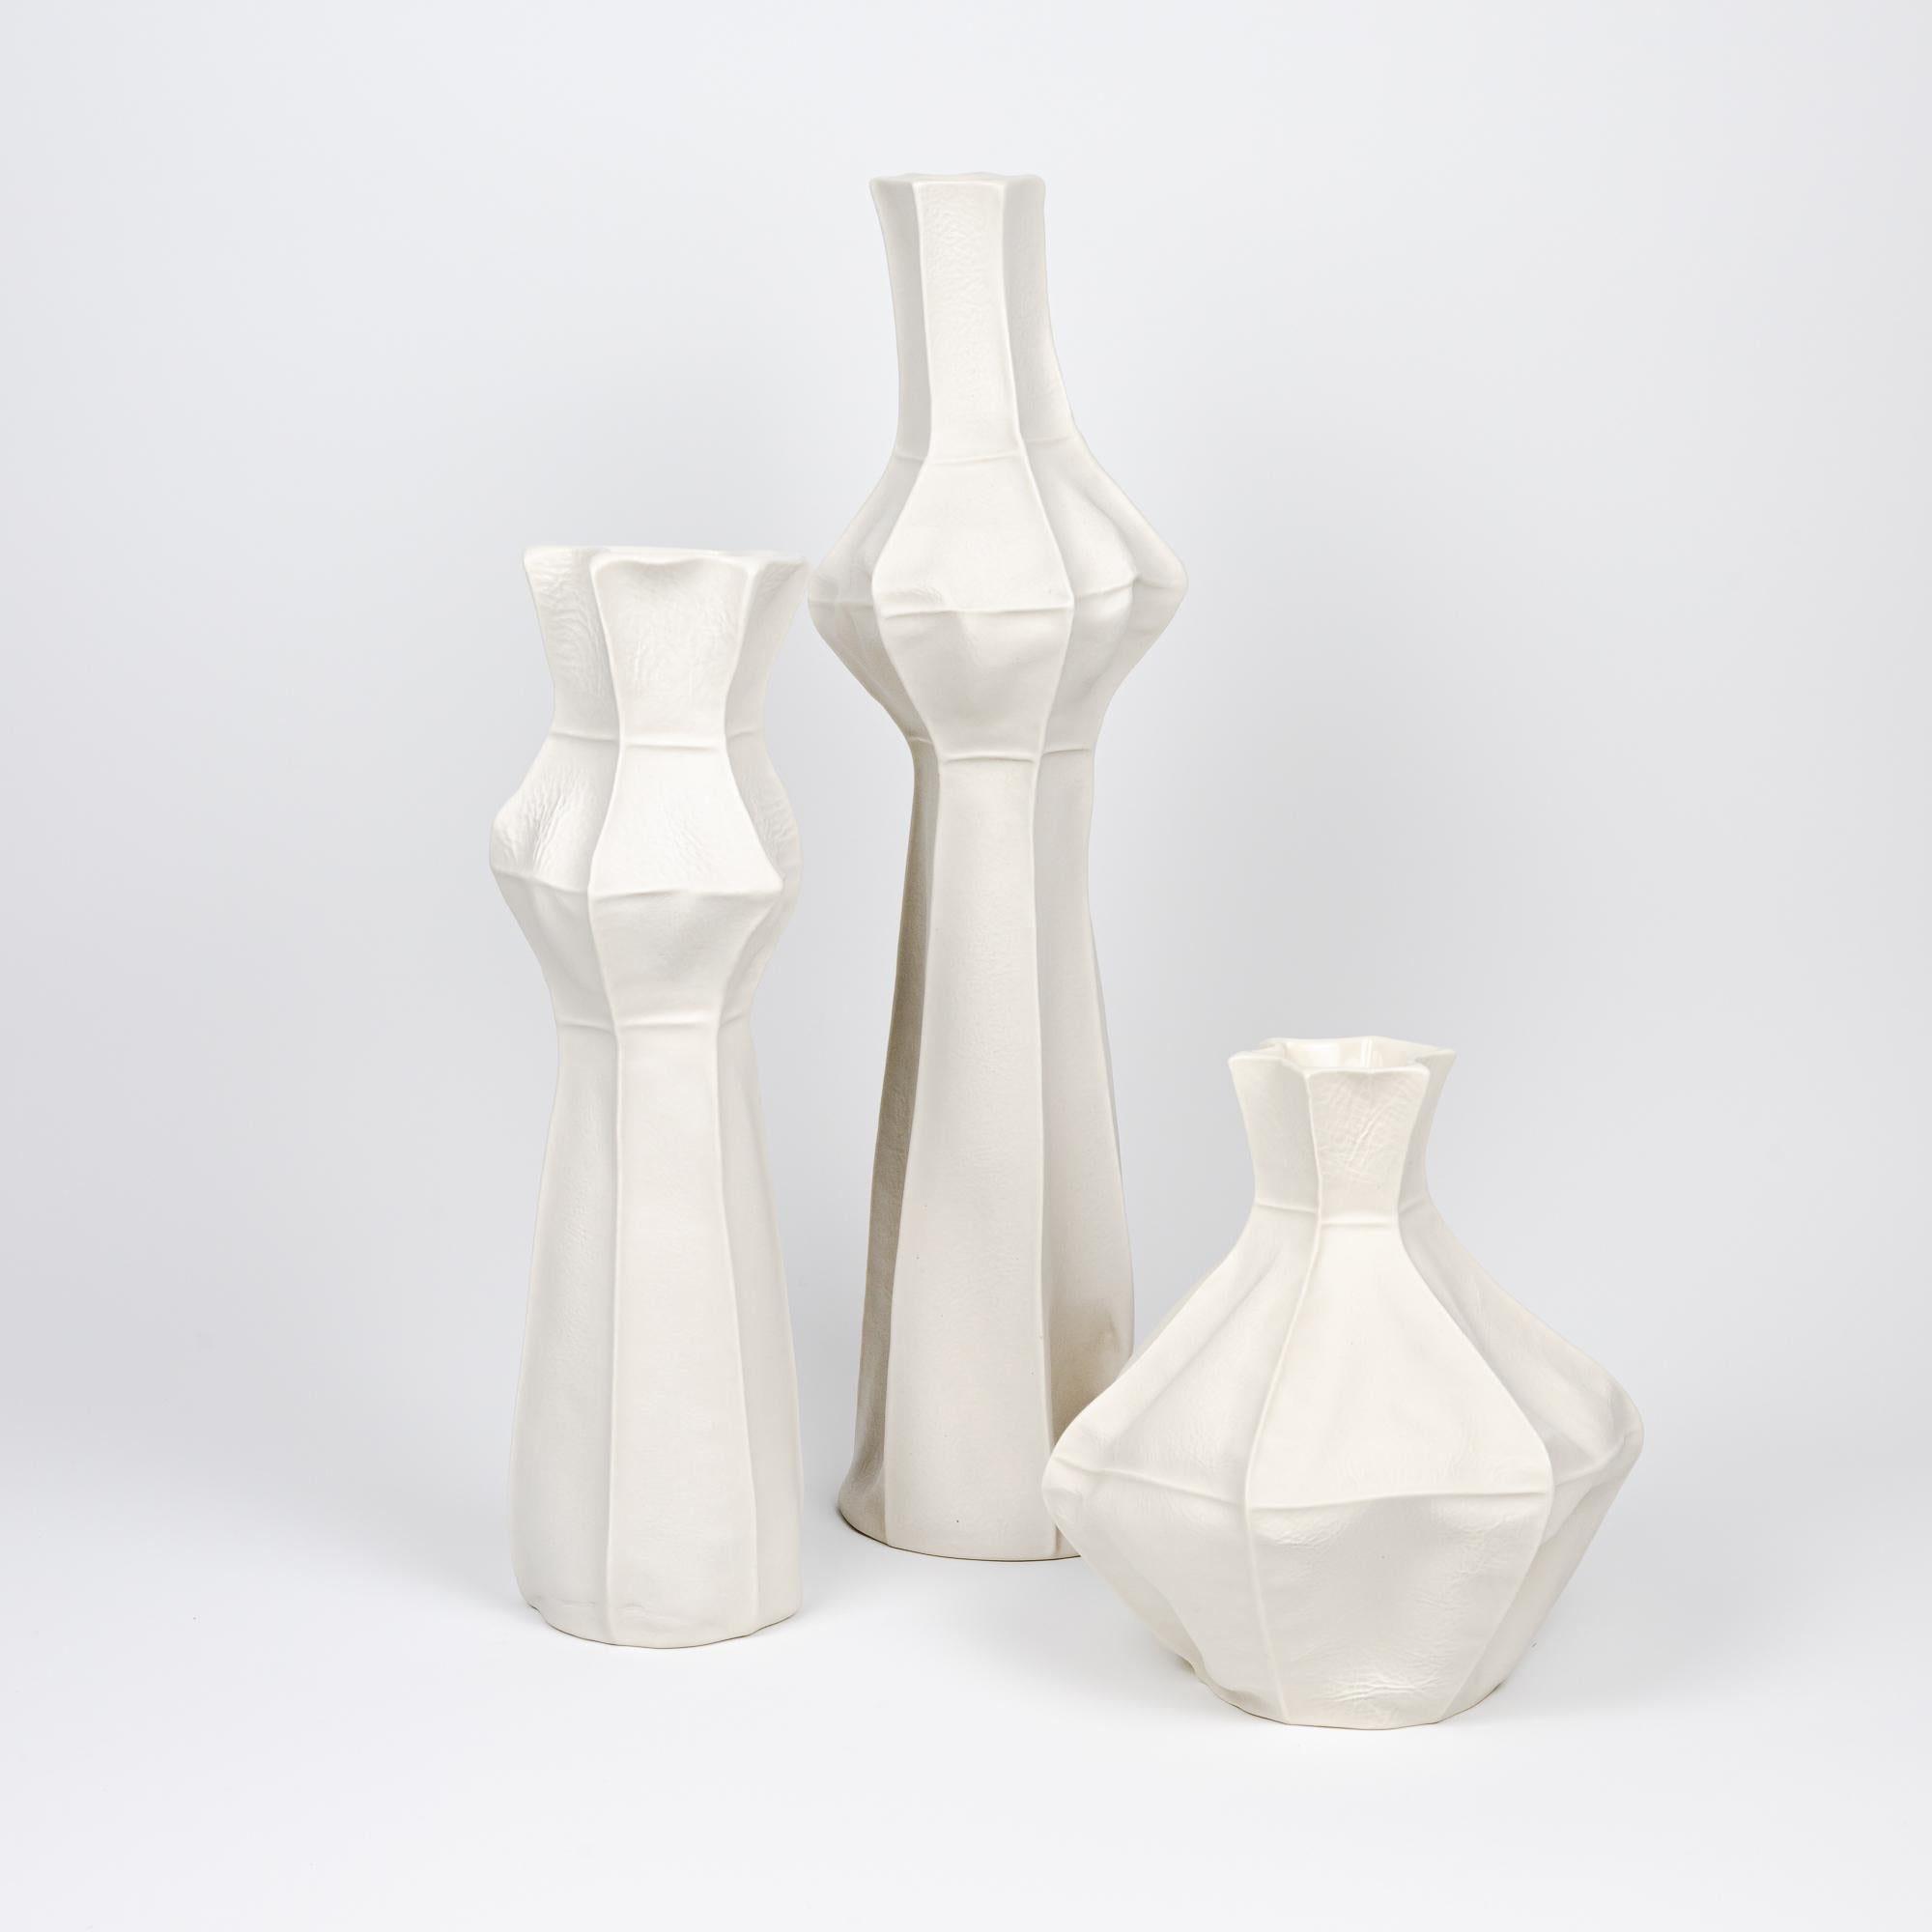 Hand-Crafted Set of 3 White Ceramic Kawa Vases, Porcelain flower vases, textured For Sale